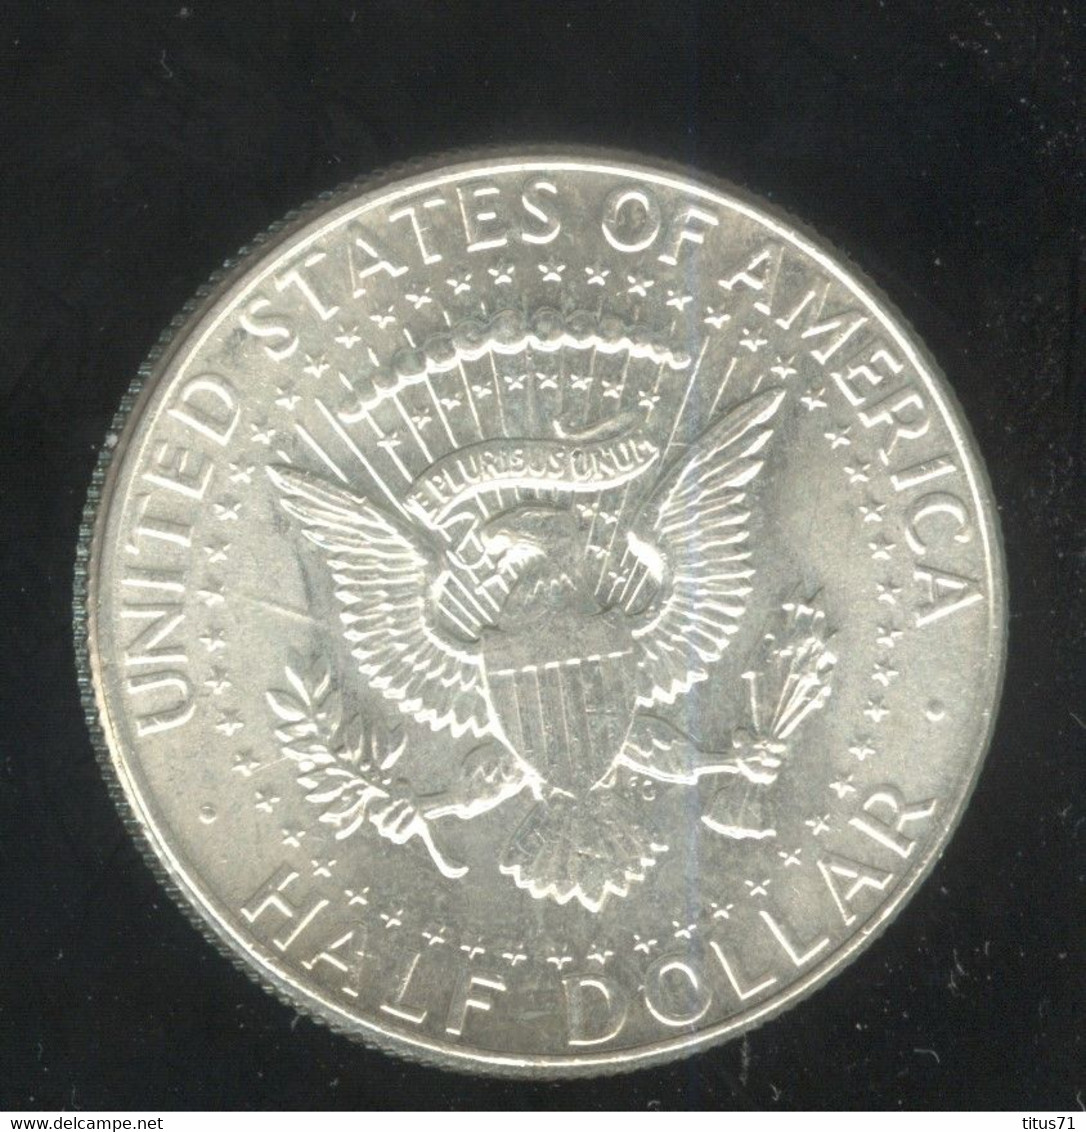 Half Dollar Etats Unis / United States 1964 SUP - 1964-…: Kennedy